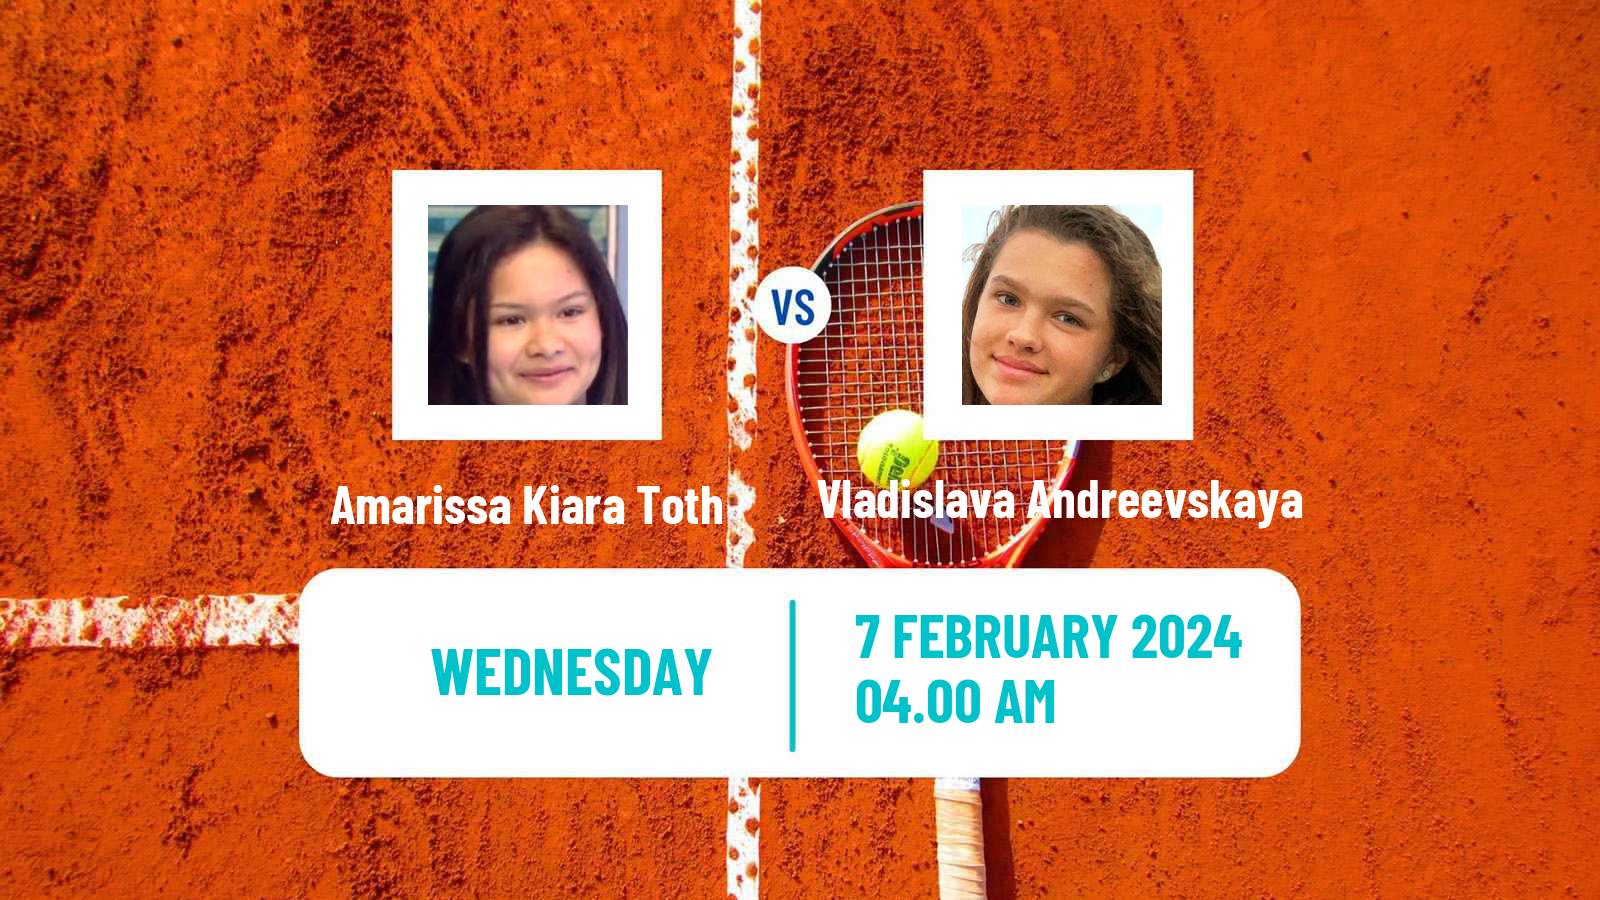 Tennis ITF W35 Antalya 2 Women Amarissa Kiara Toth - Vladislava Andreevskaya